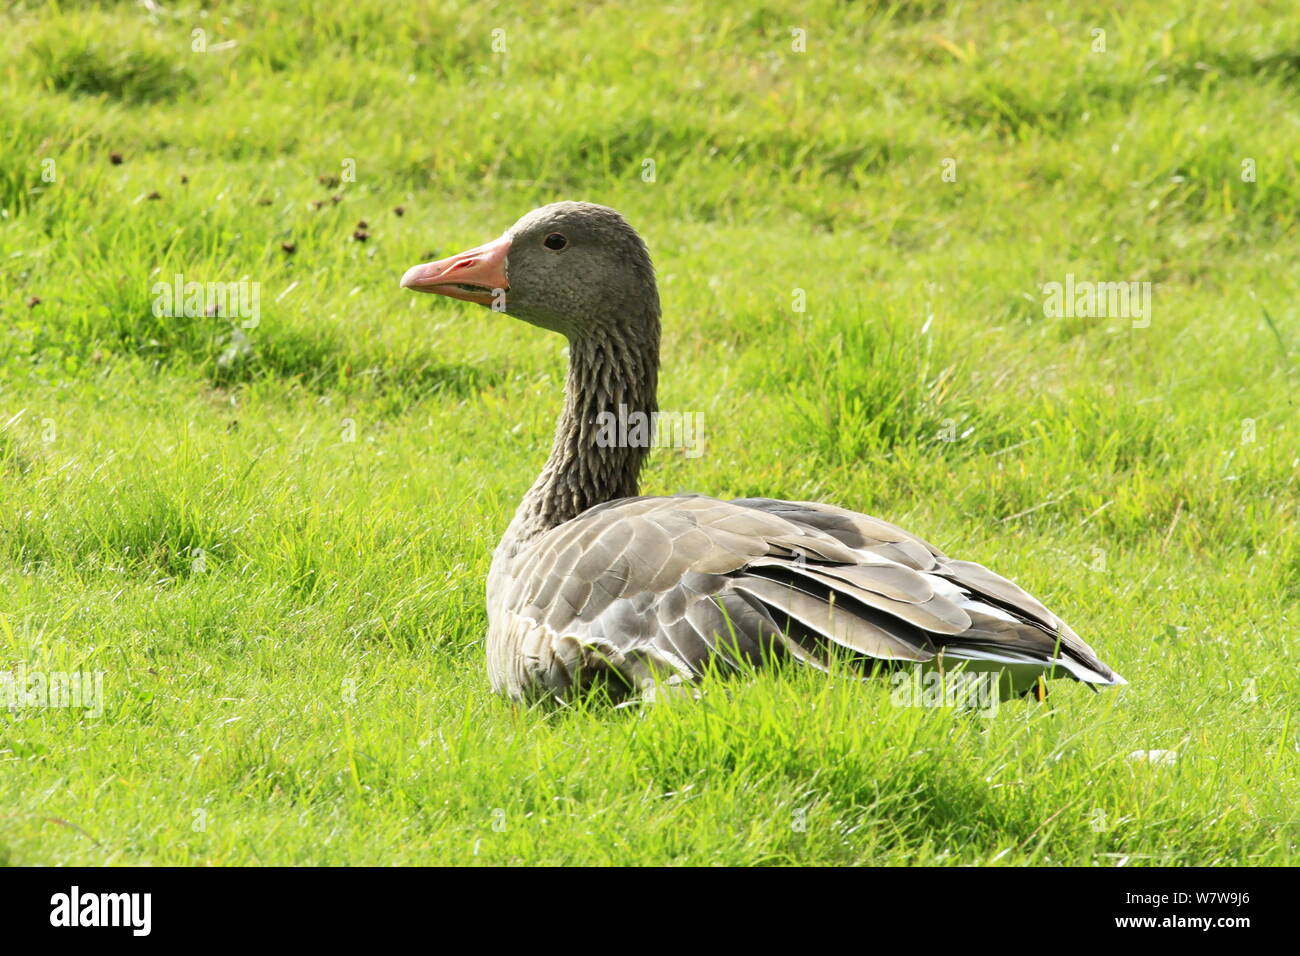 Greylag goose in grass Stock Photo